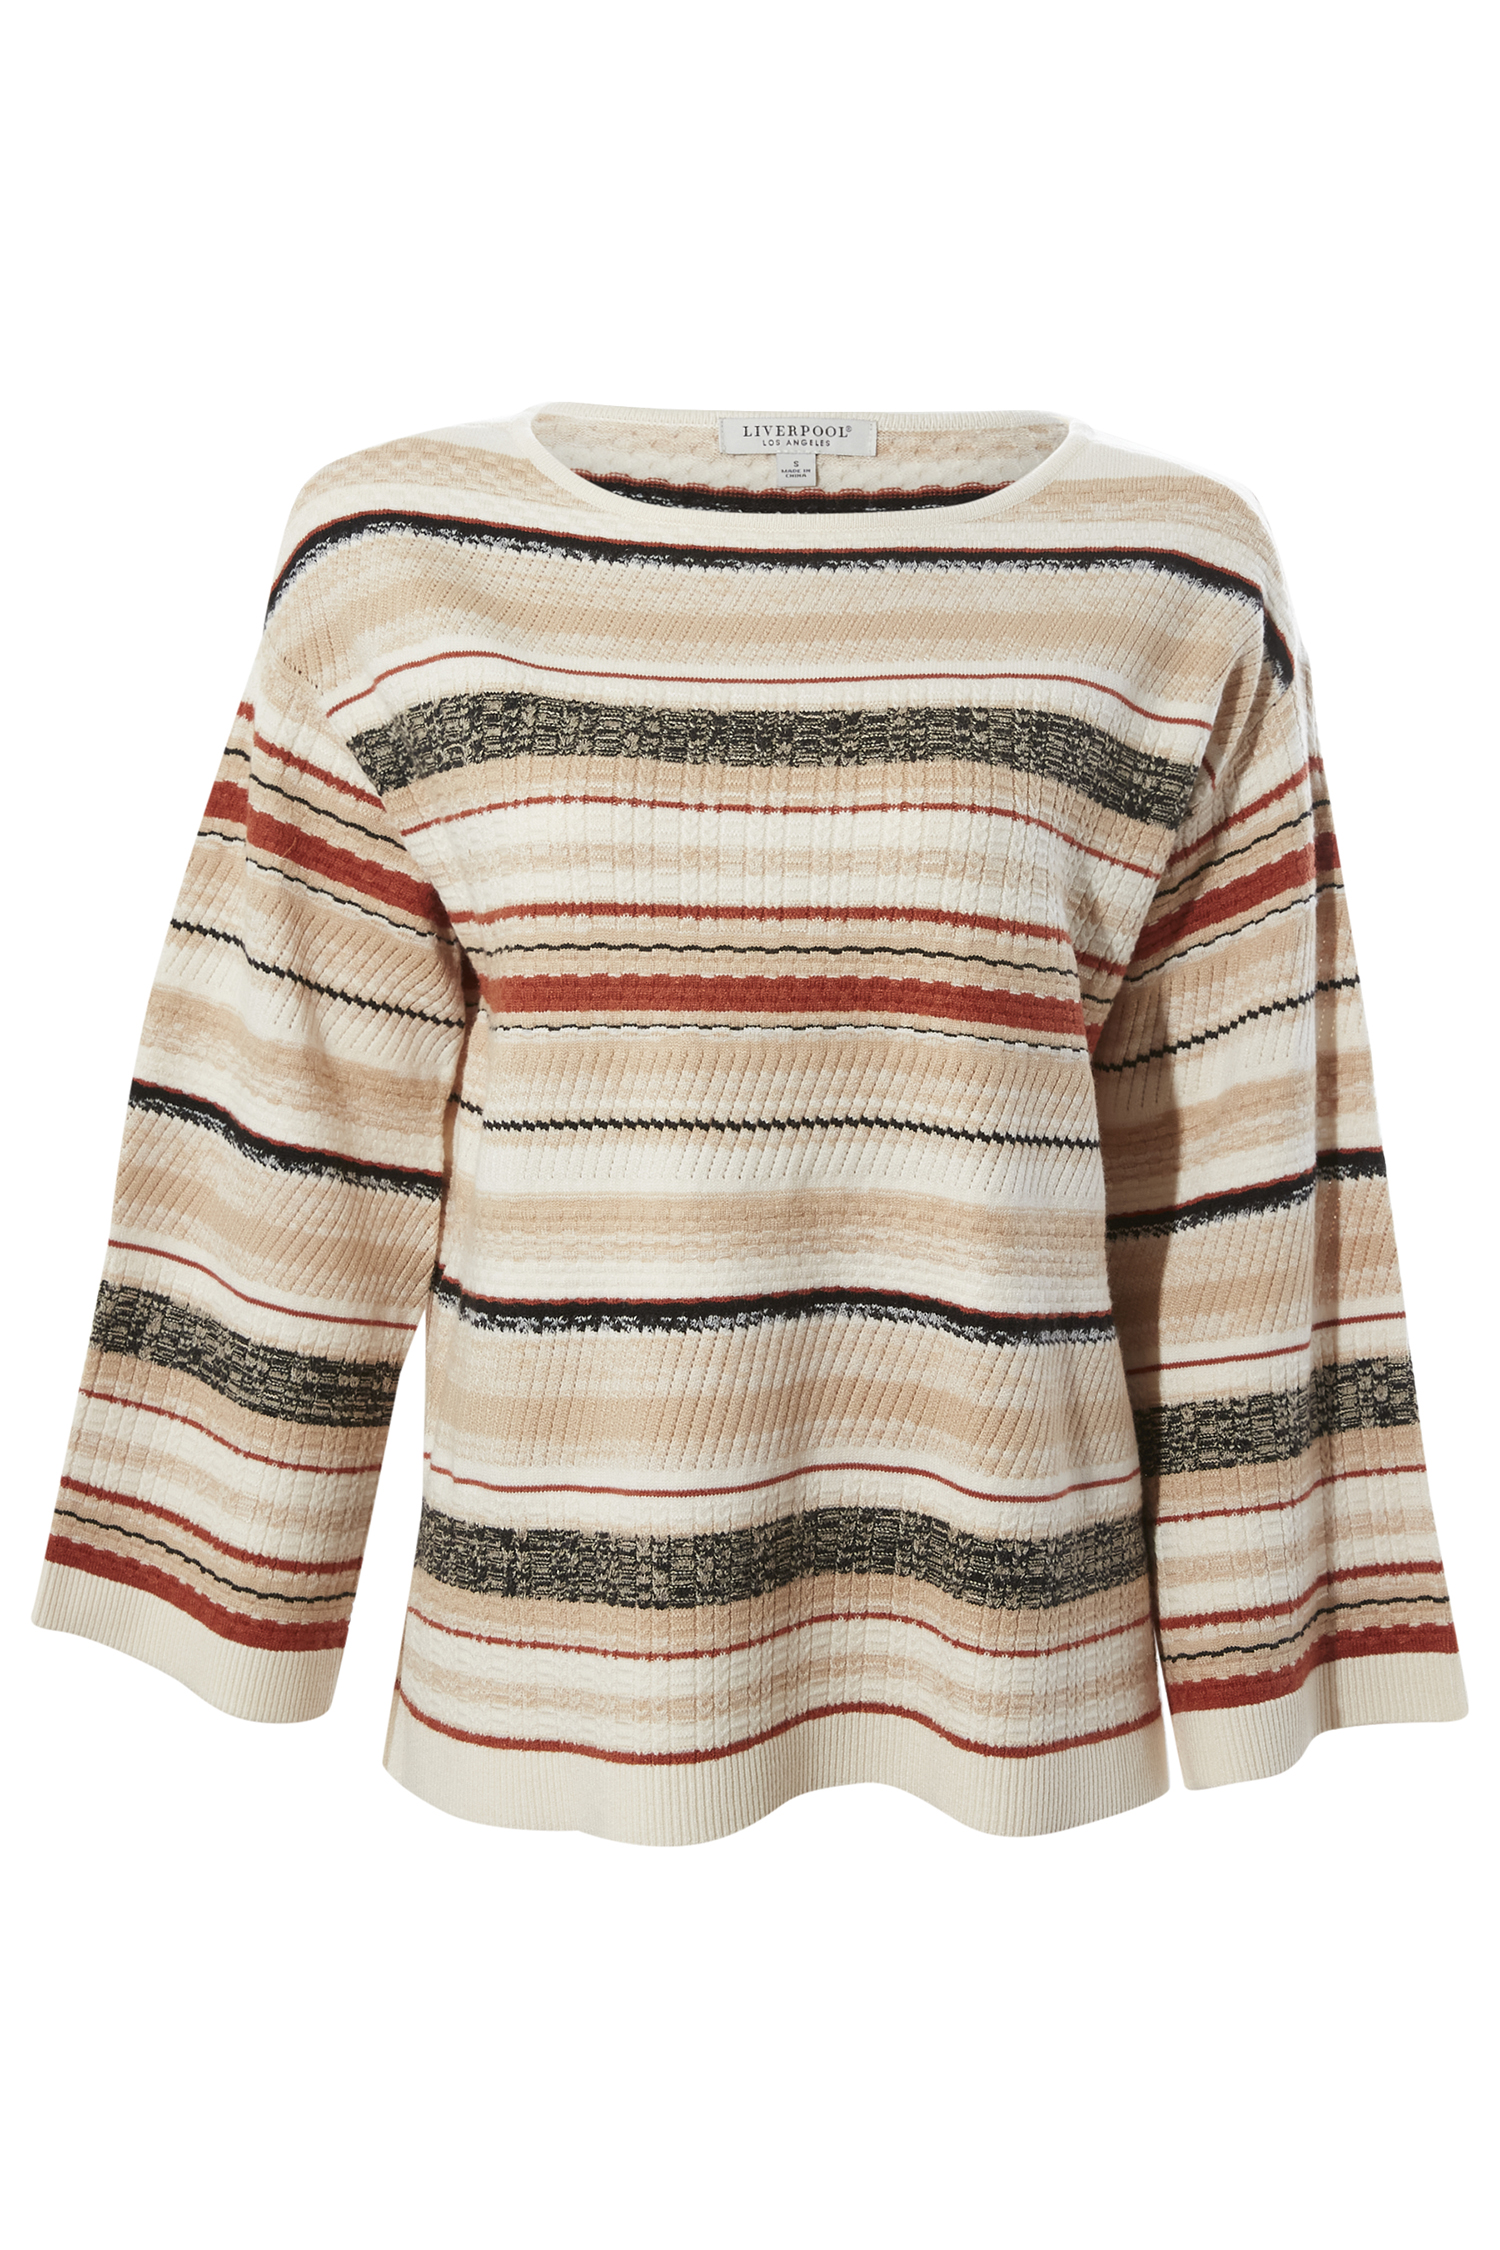 Liverpool Boat Neck Textured Sweater in Cream Multi S - XL